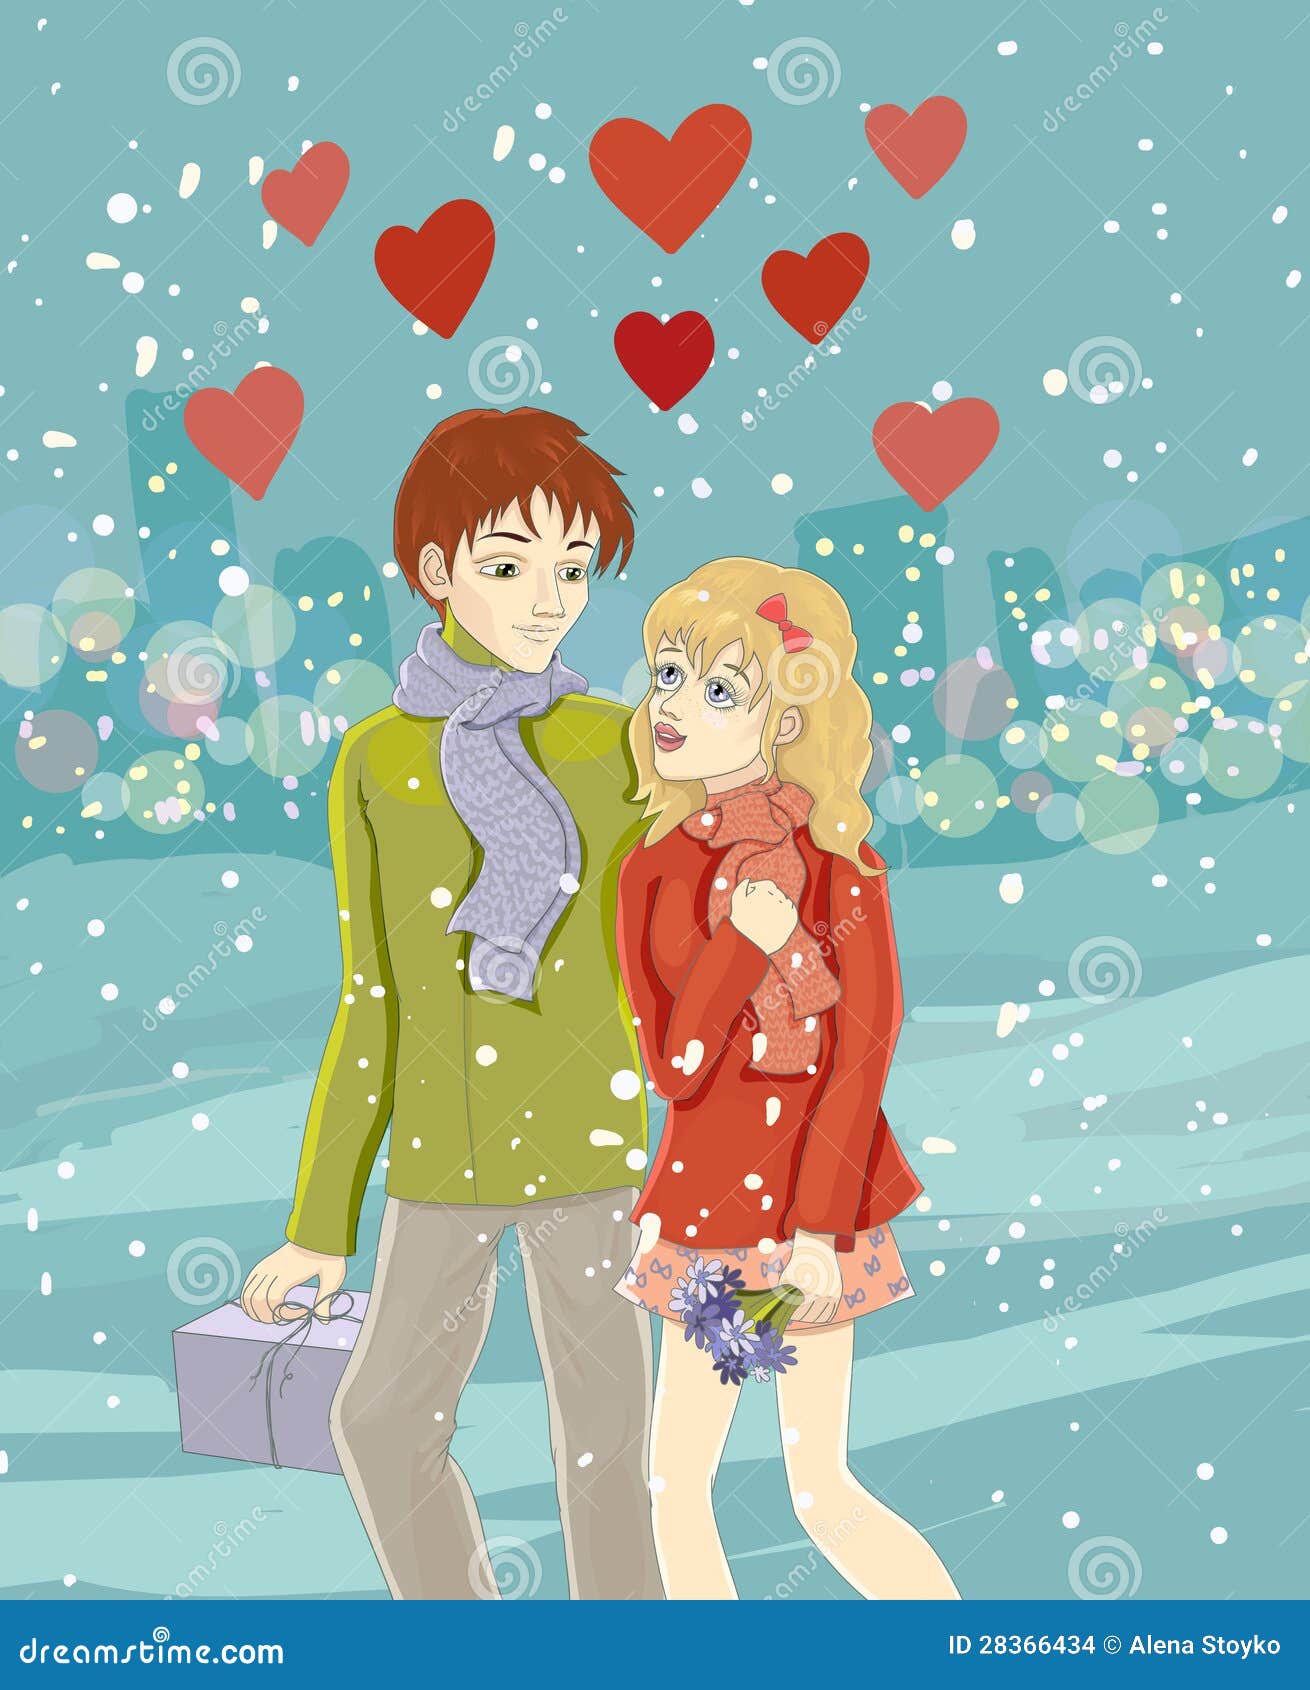 Romantic couple stock vector. Illustration of happy, cheerful - 28366434